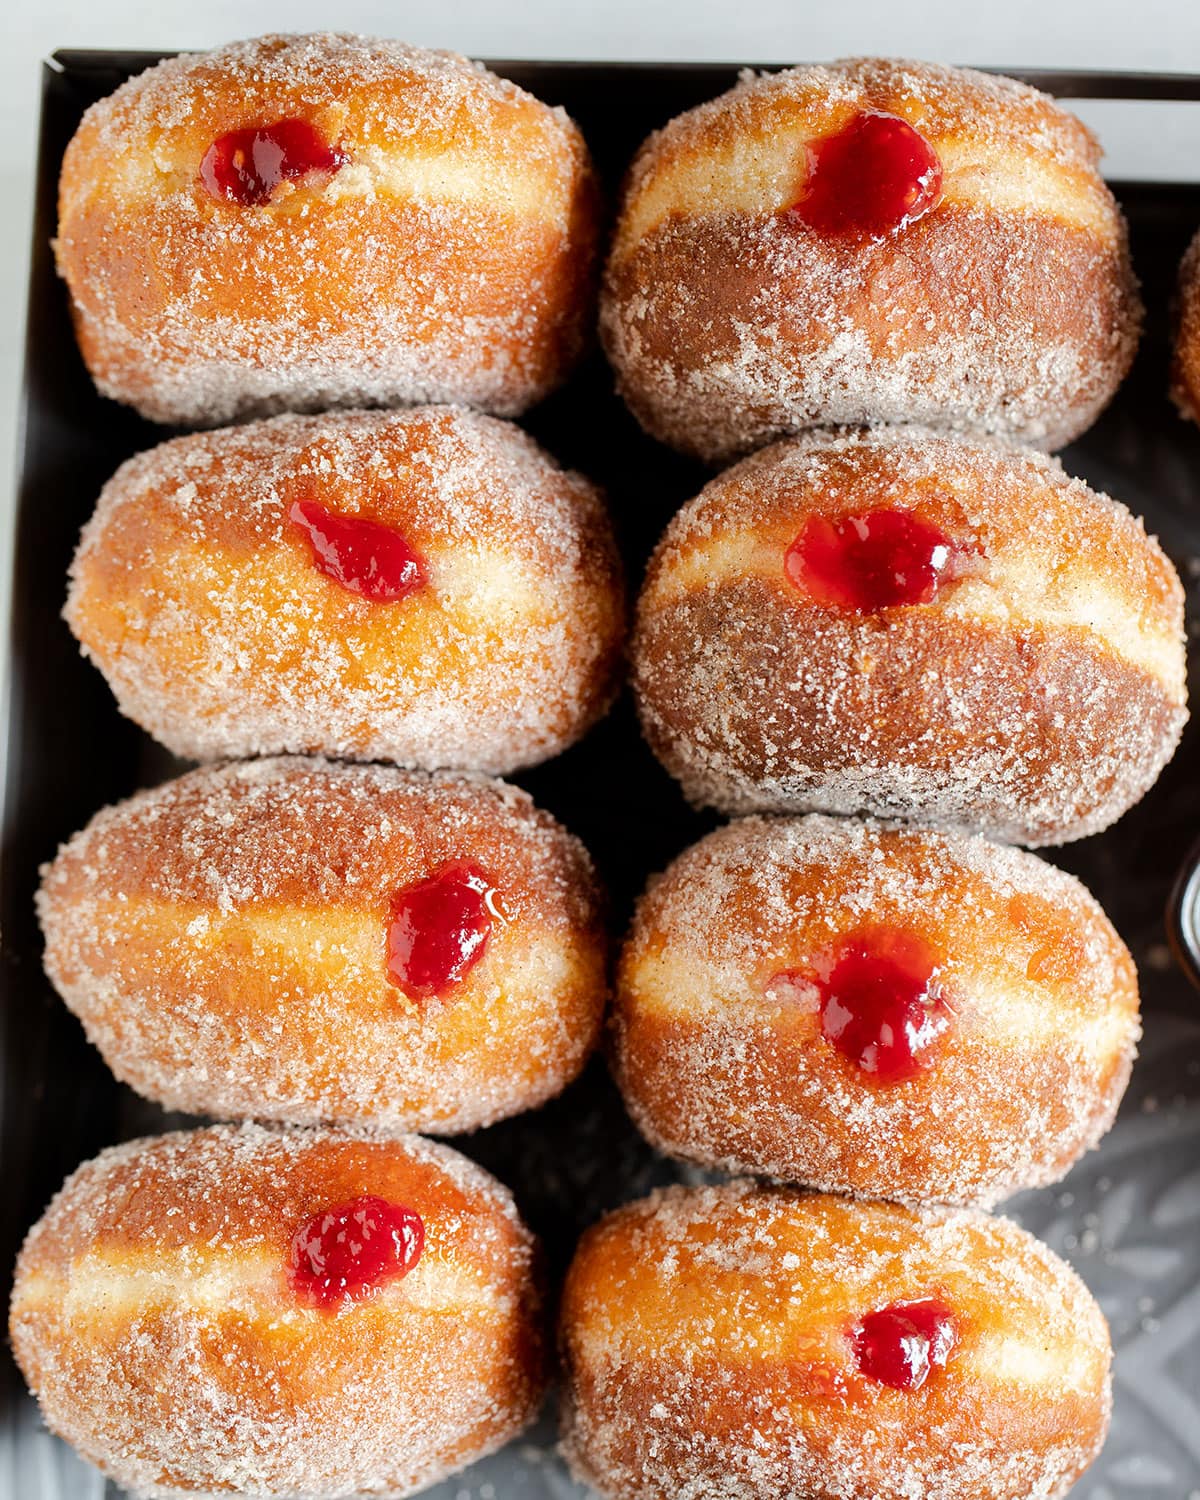 jam doughnuts on a tray